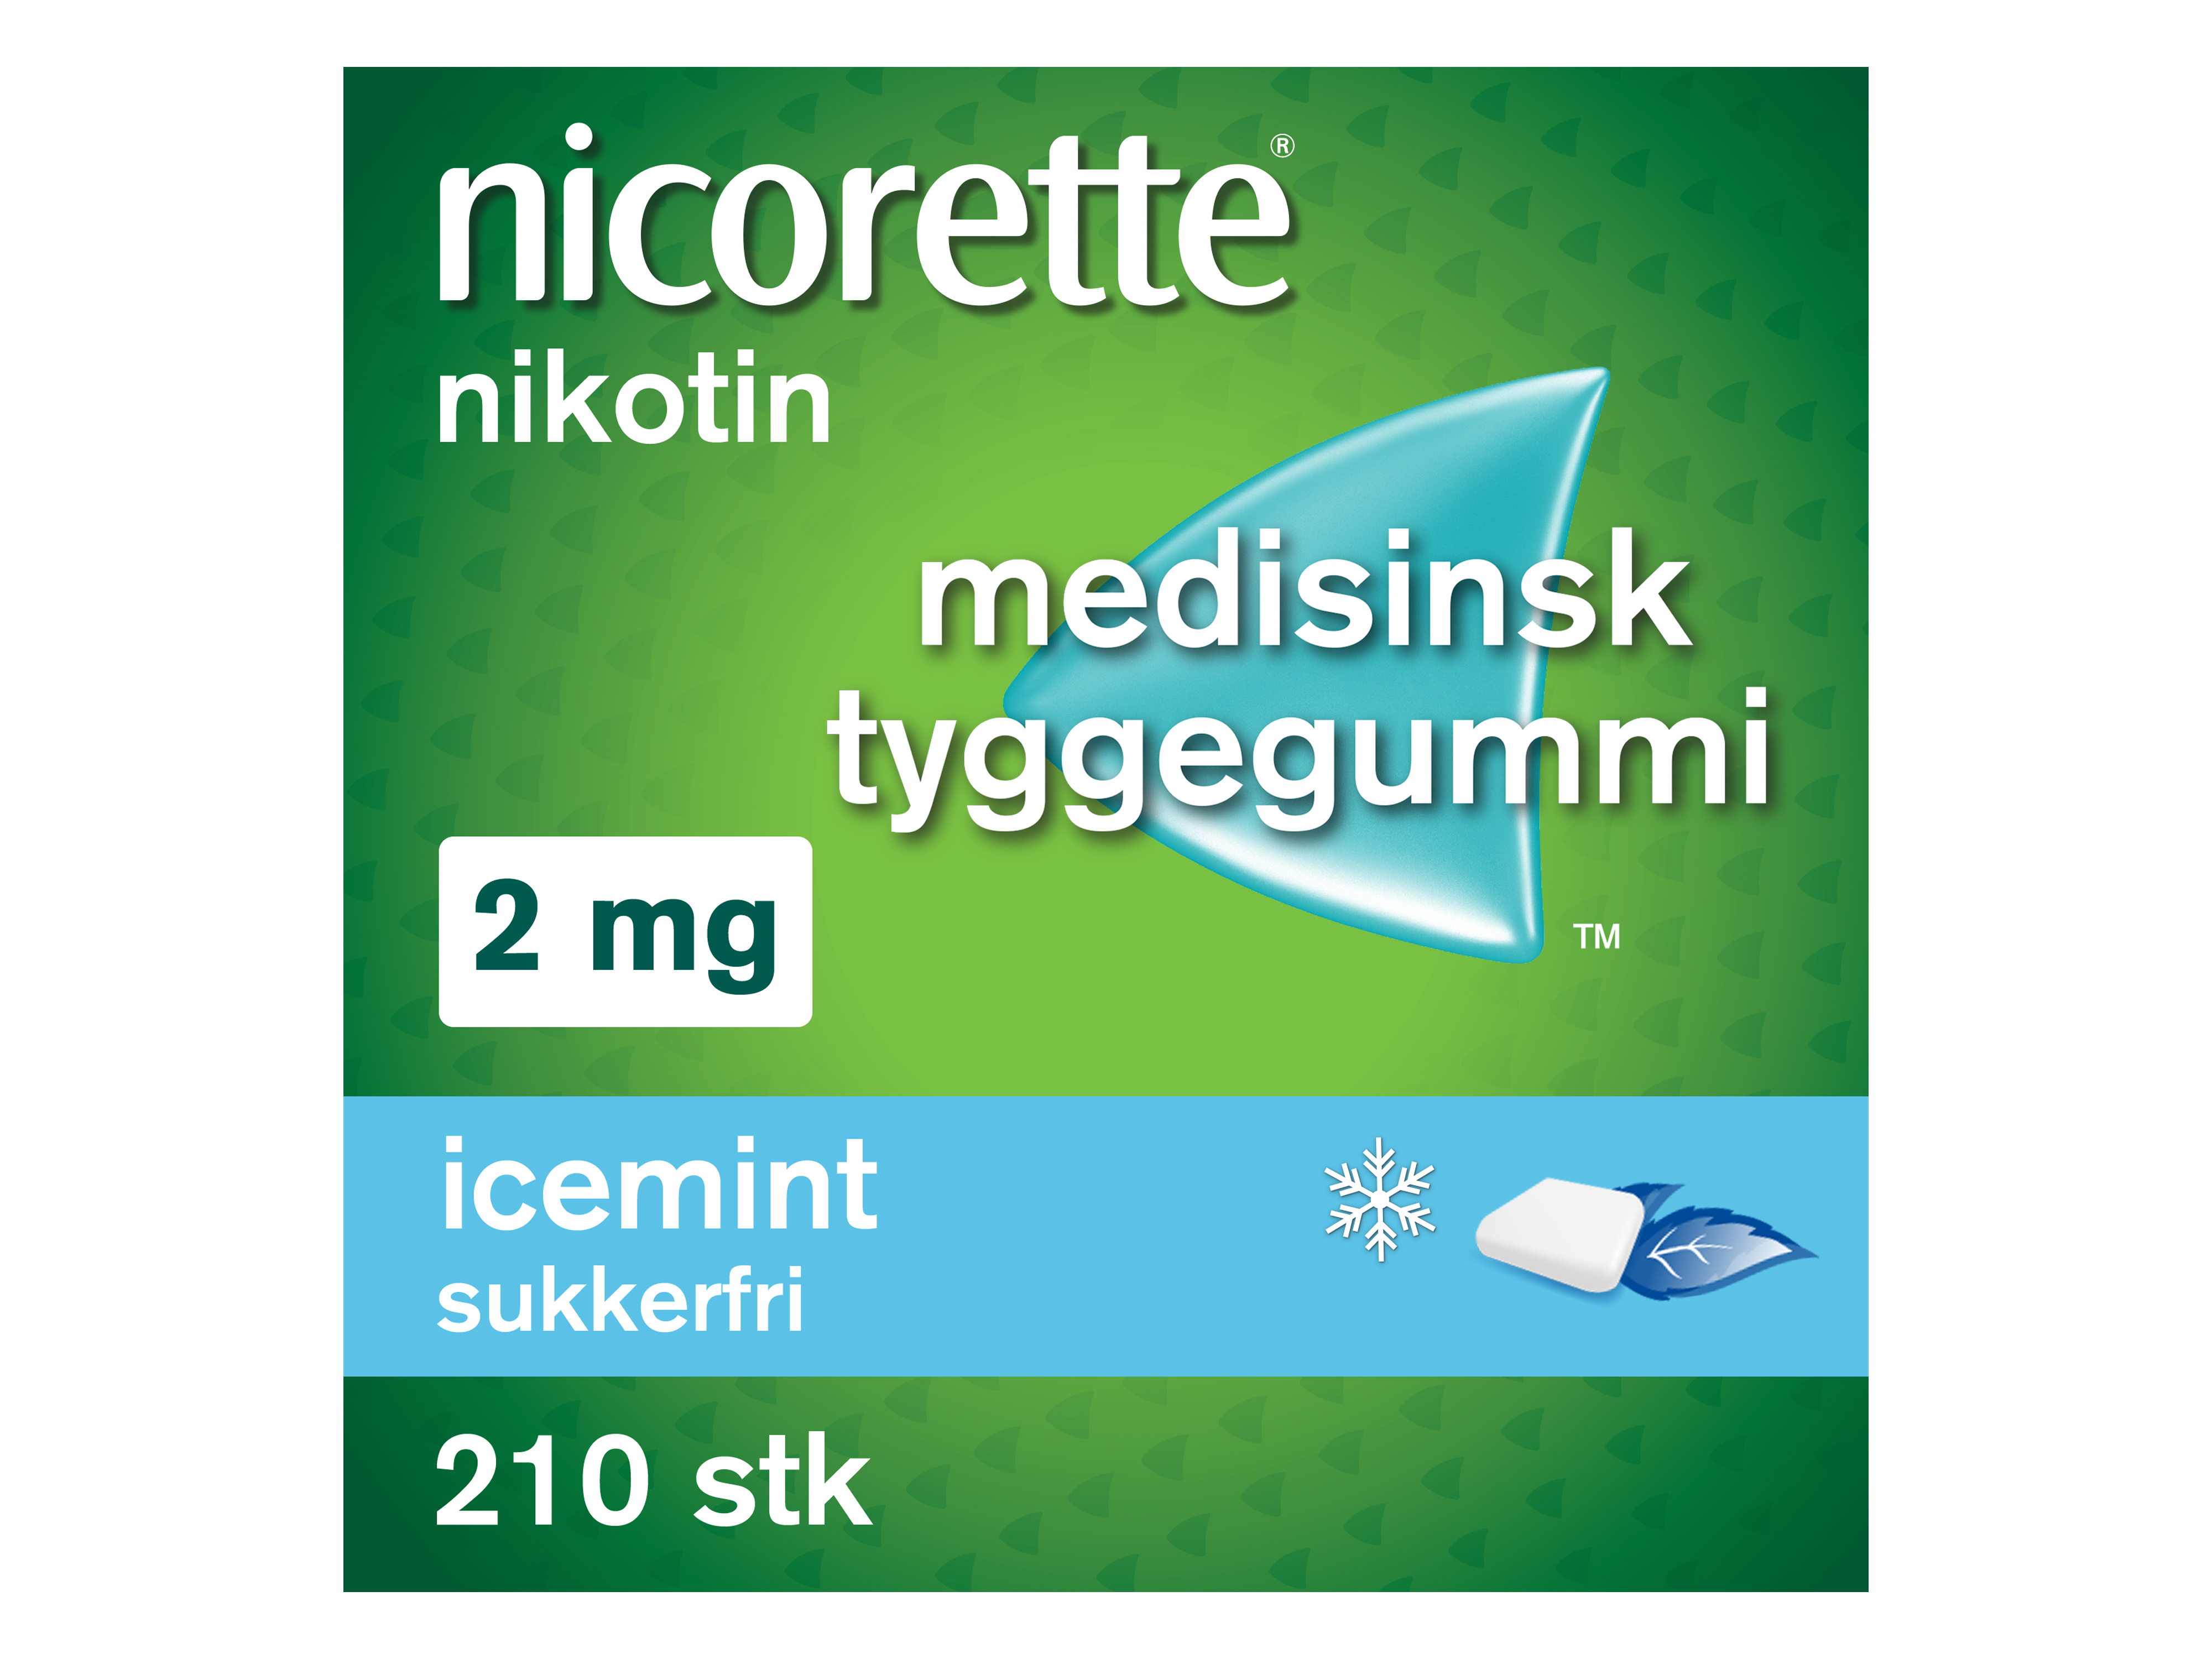 Nicorette Tyggegummi, 2 mg nikotin, Icemint 210 stk., Slutte å røyke